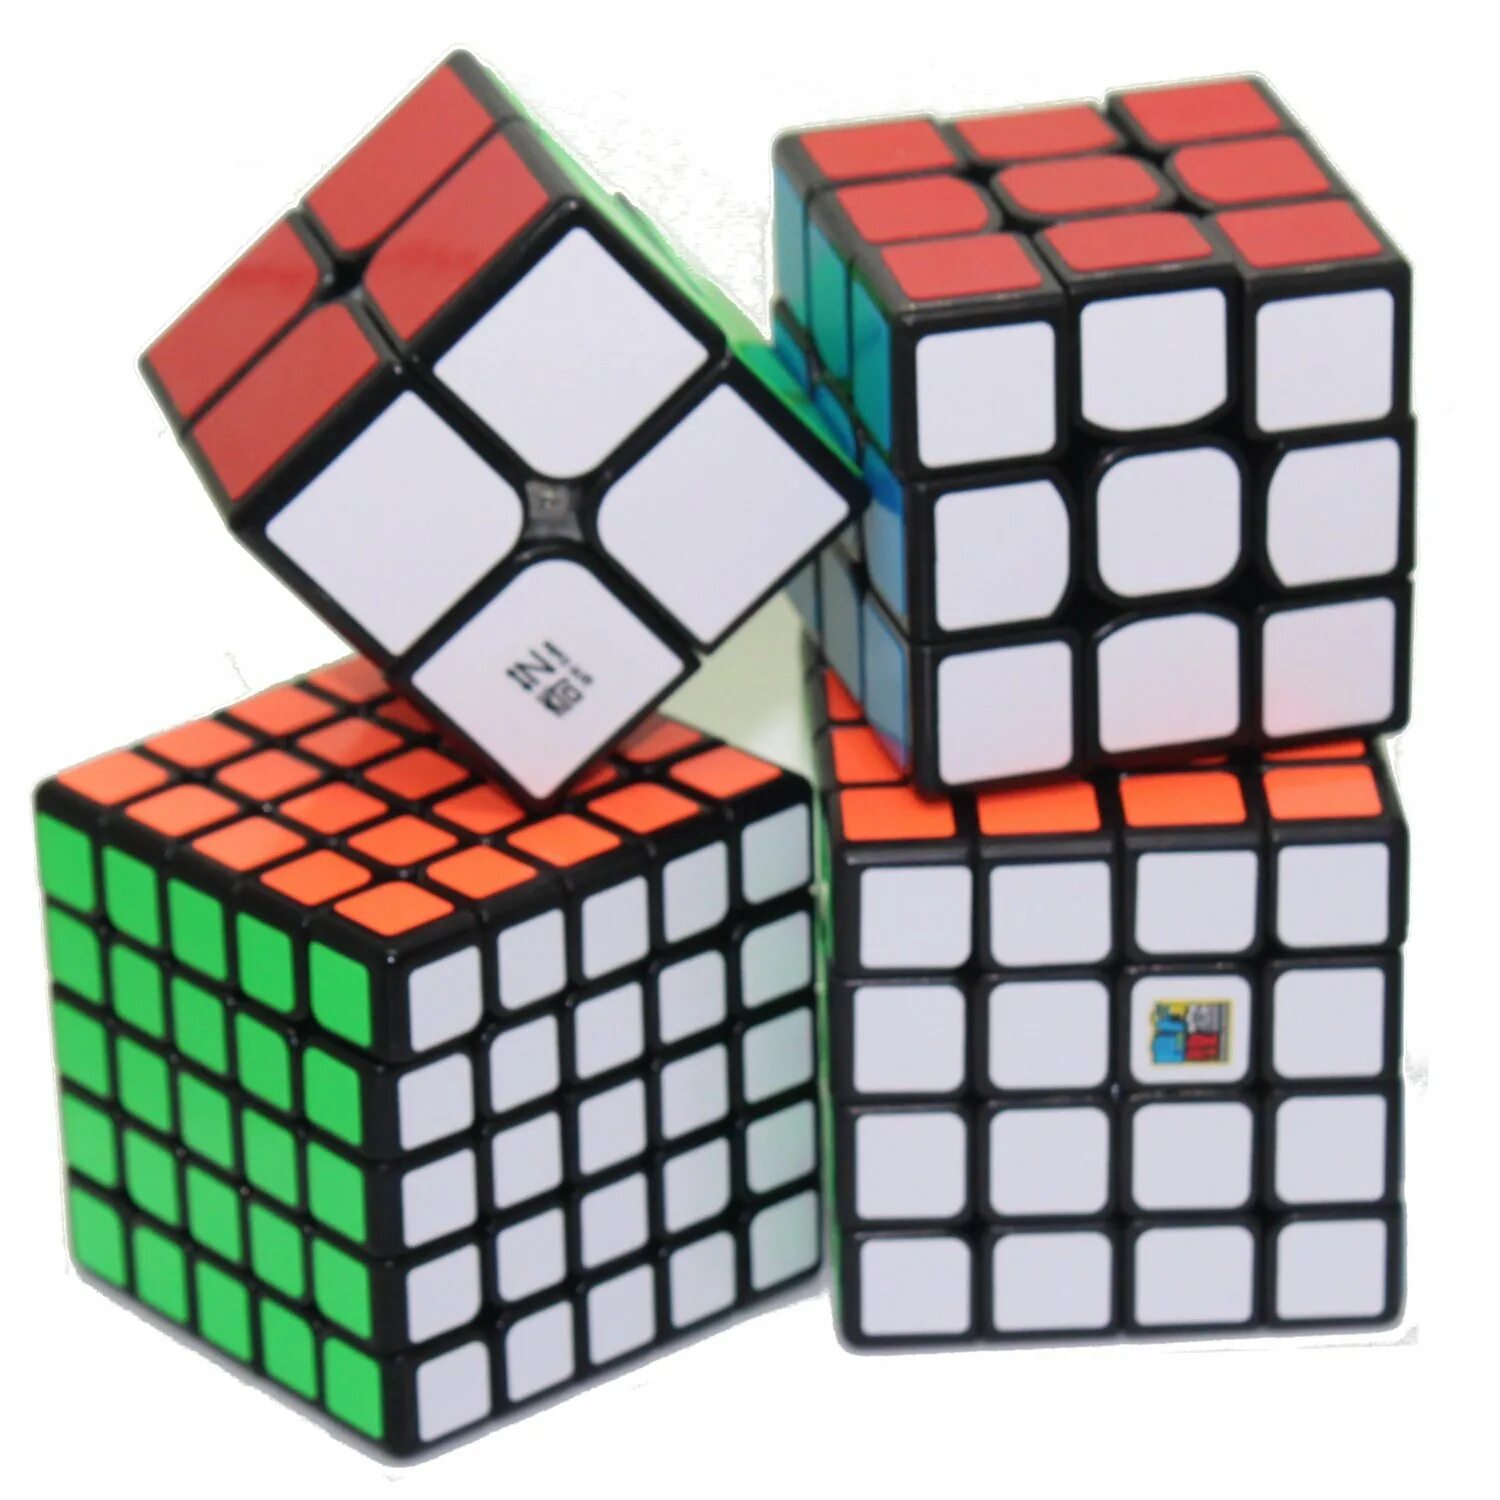 Включи рубики нолики. Рубикс Войт Кьюб. Cube Rubik 4x4 Formula. Кубик Рубика Monster go 4x4. Maqnitok Speed Kybe головоломка.